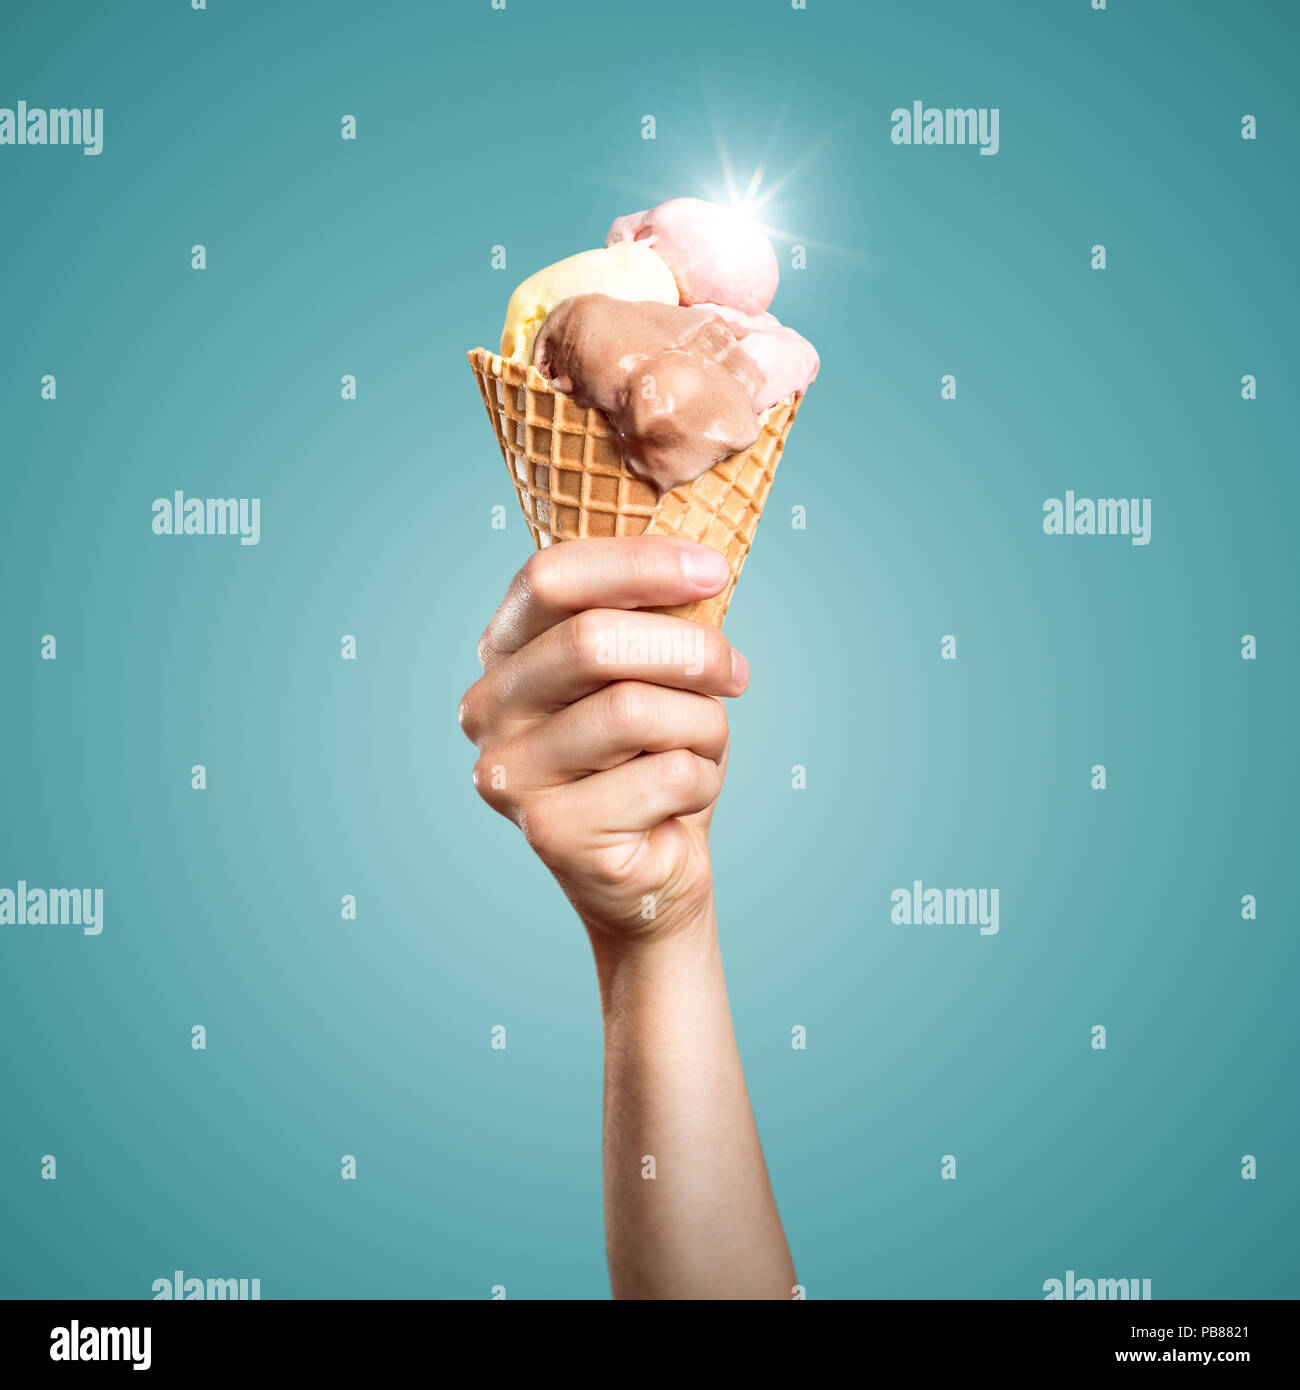 Epic ice cream cone Stock Photo